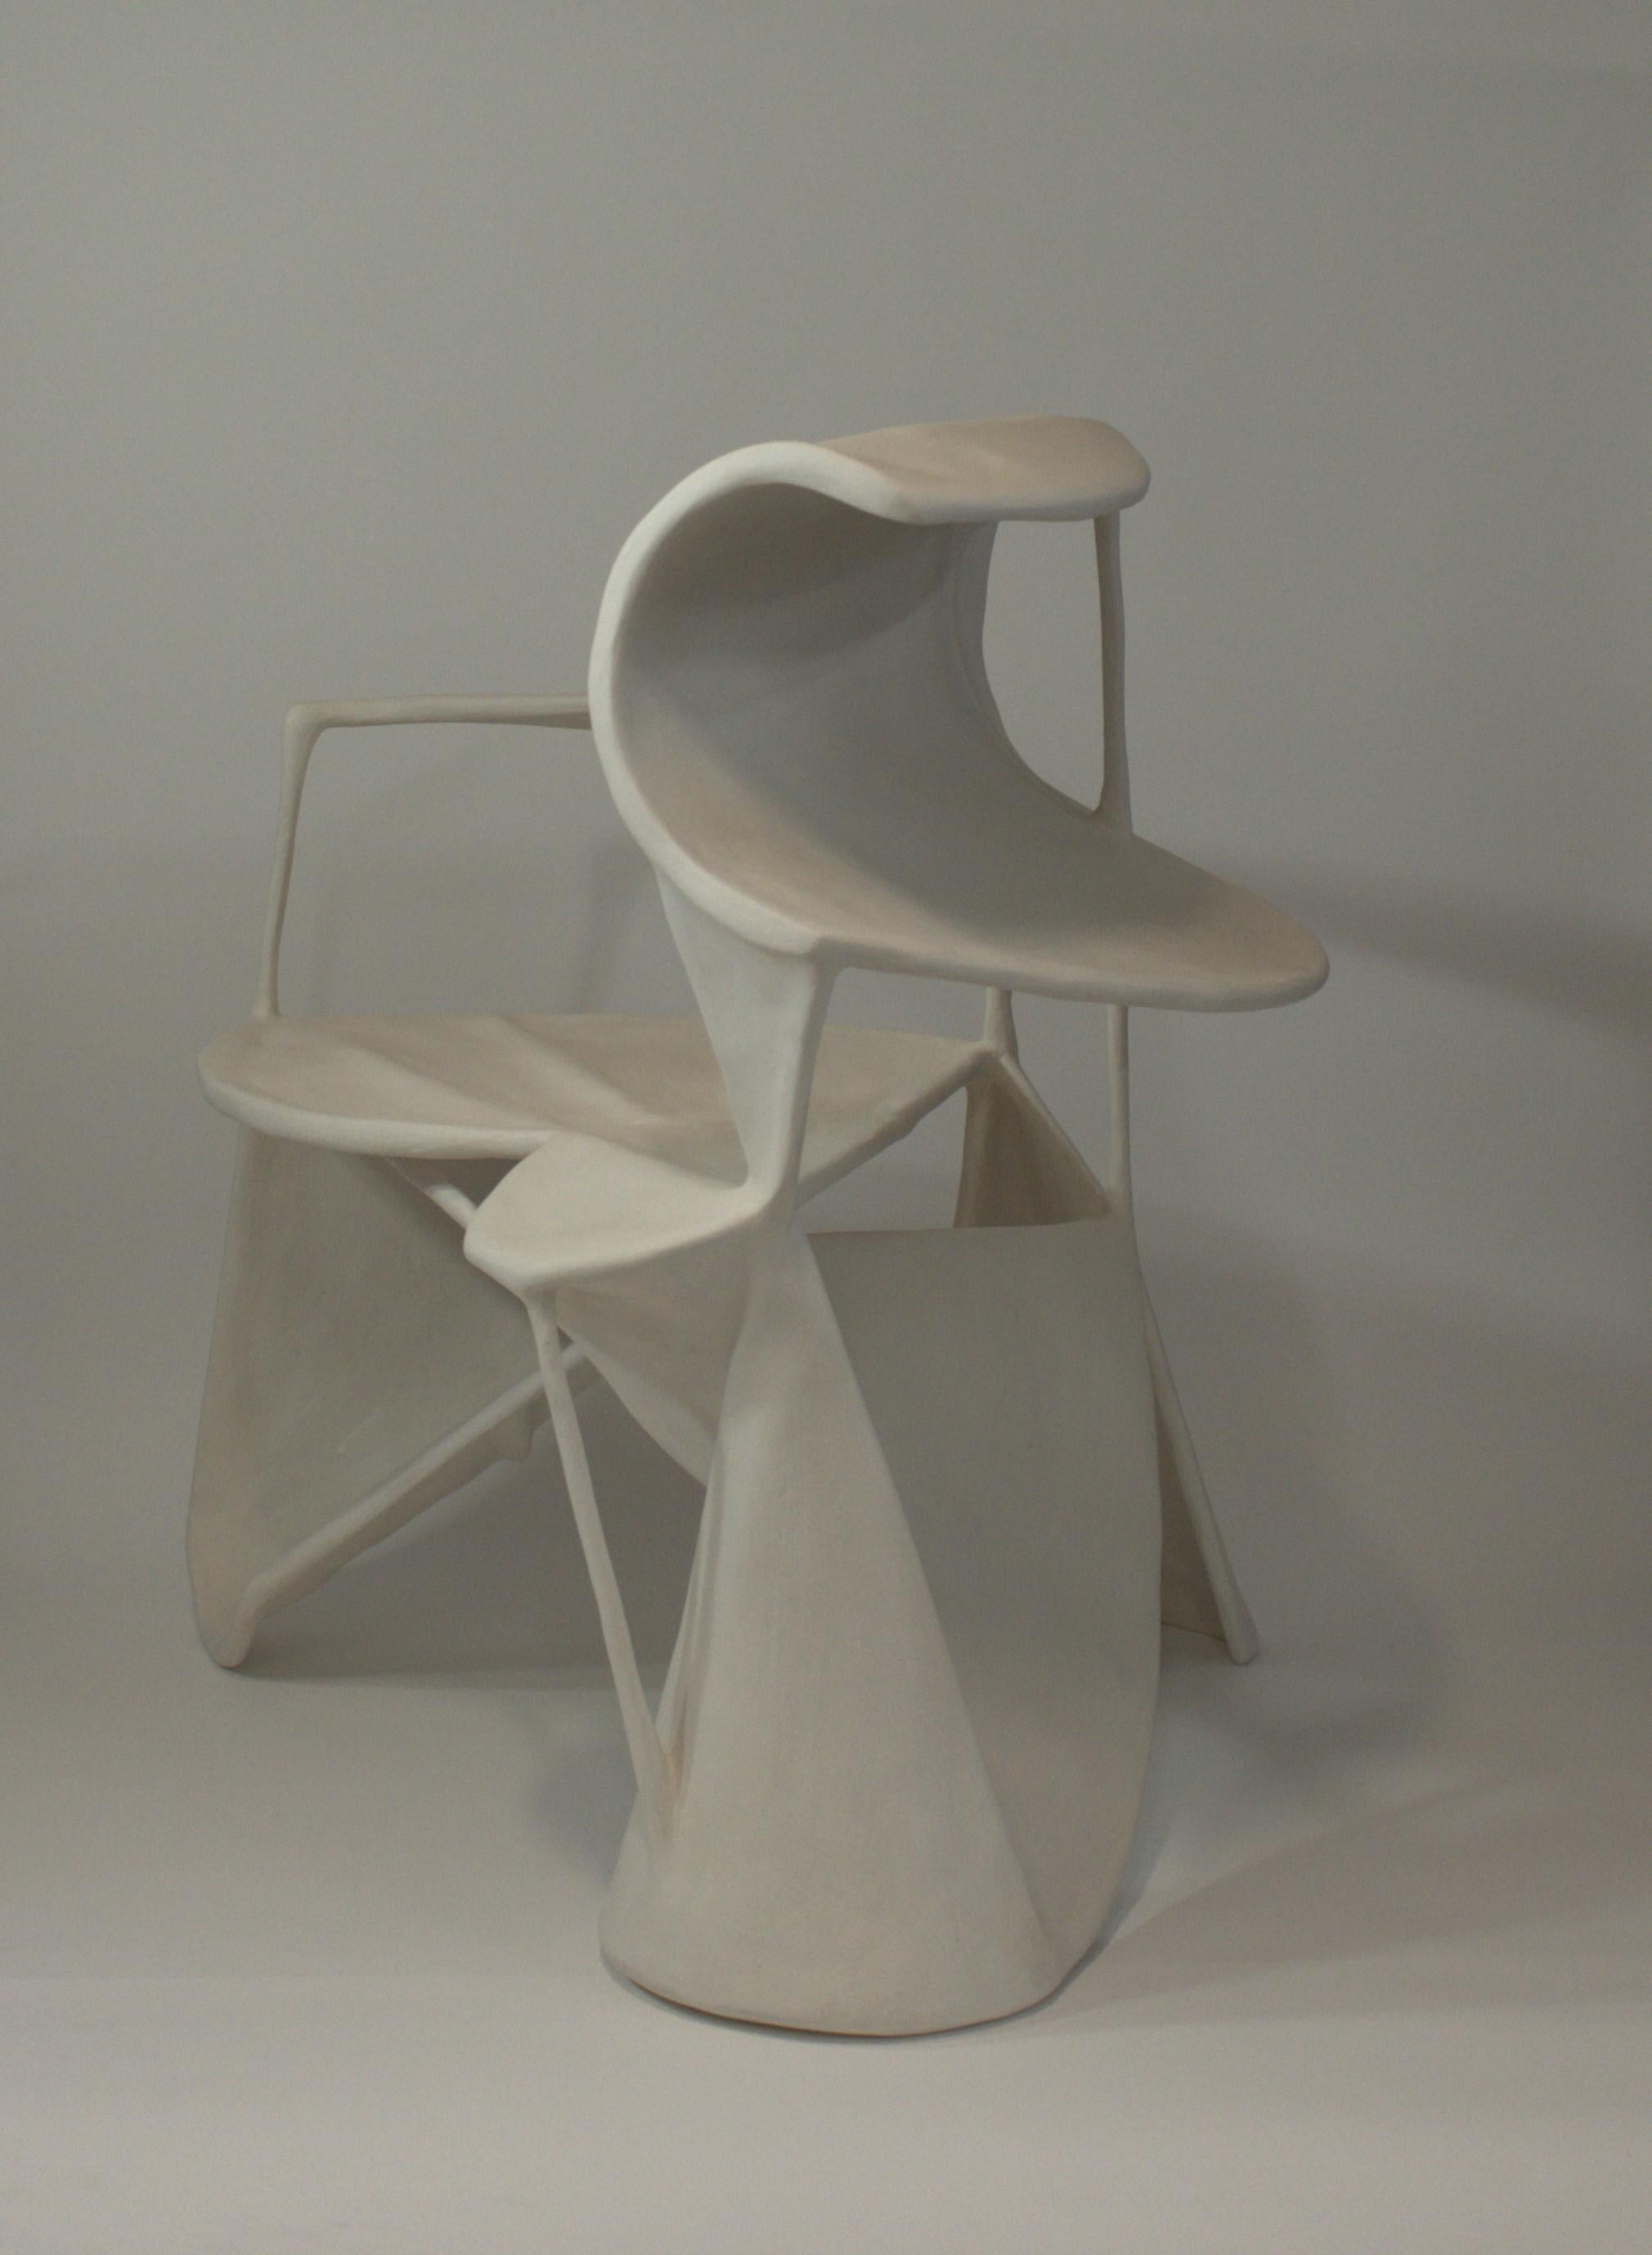 Dutch Contemporary Design White Textured Curved Sculptures Chair by Jordan van der Ven For Sale